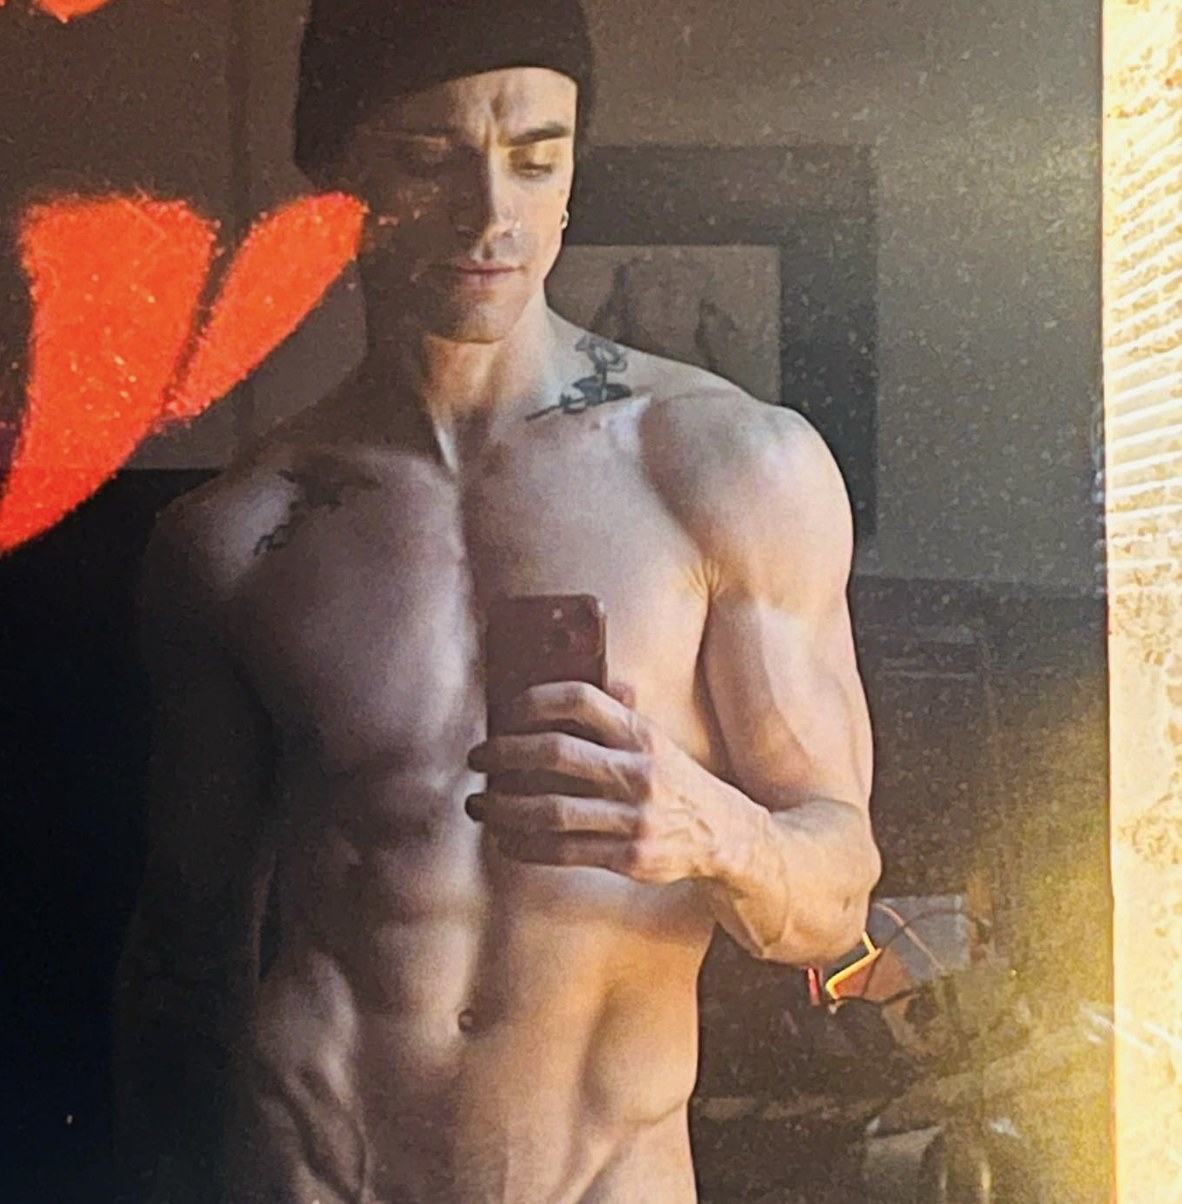 A shirtless mirror selfie of Jordan showing off his abs